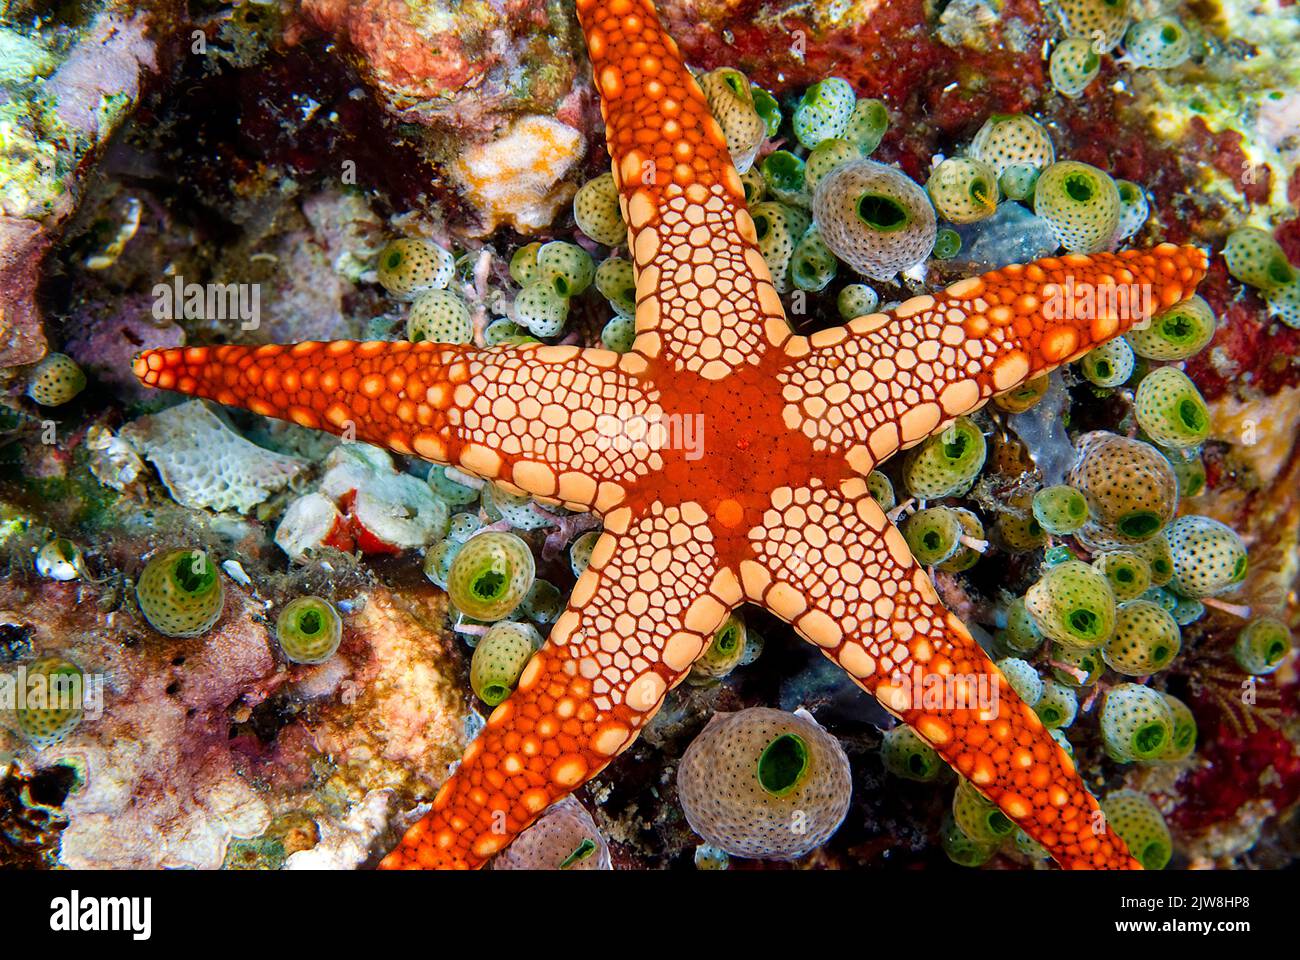 Necklase Sea Star (Fromia monilis) e Green Urn Sea Squirts o Green Barrel Sea Squirts (Didemnum molle), Maldive, Oceano Indiano, Asia Foto Stock